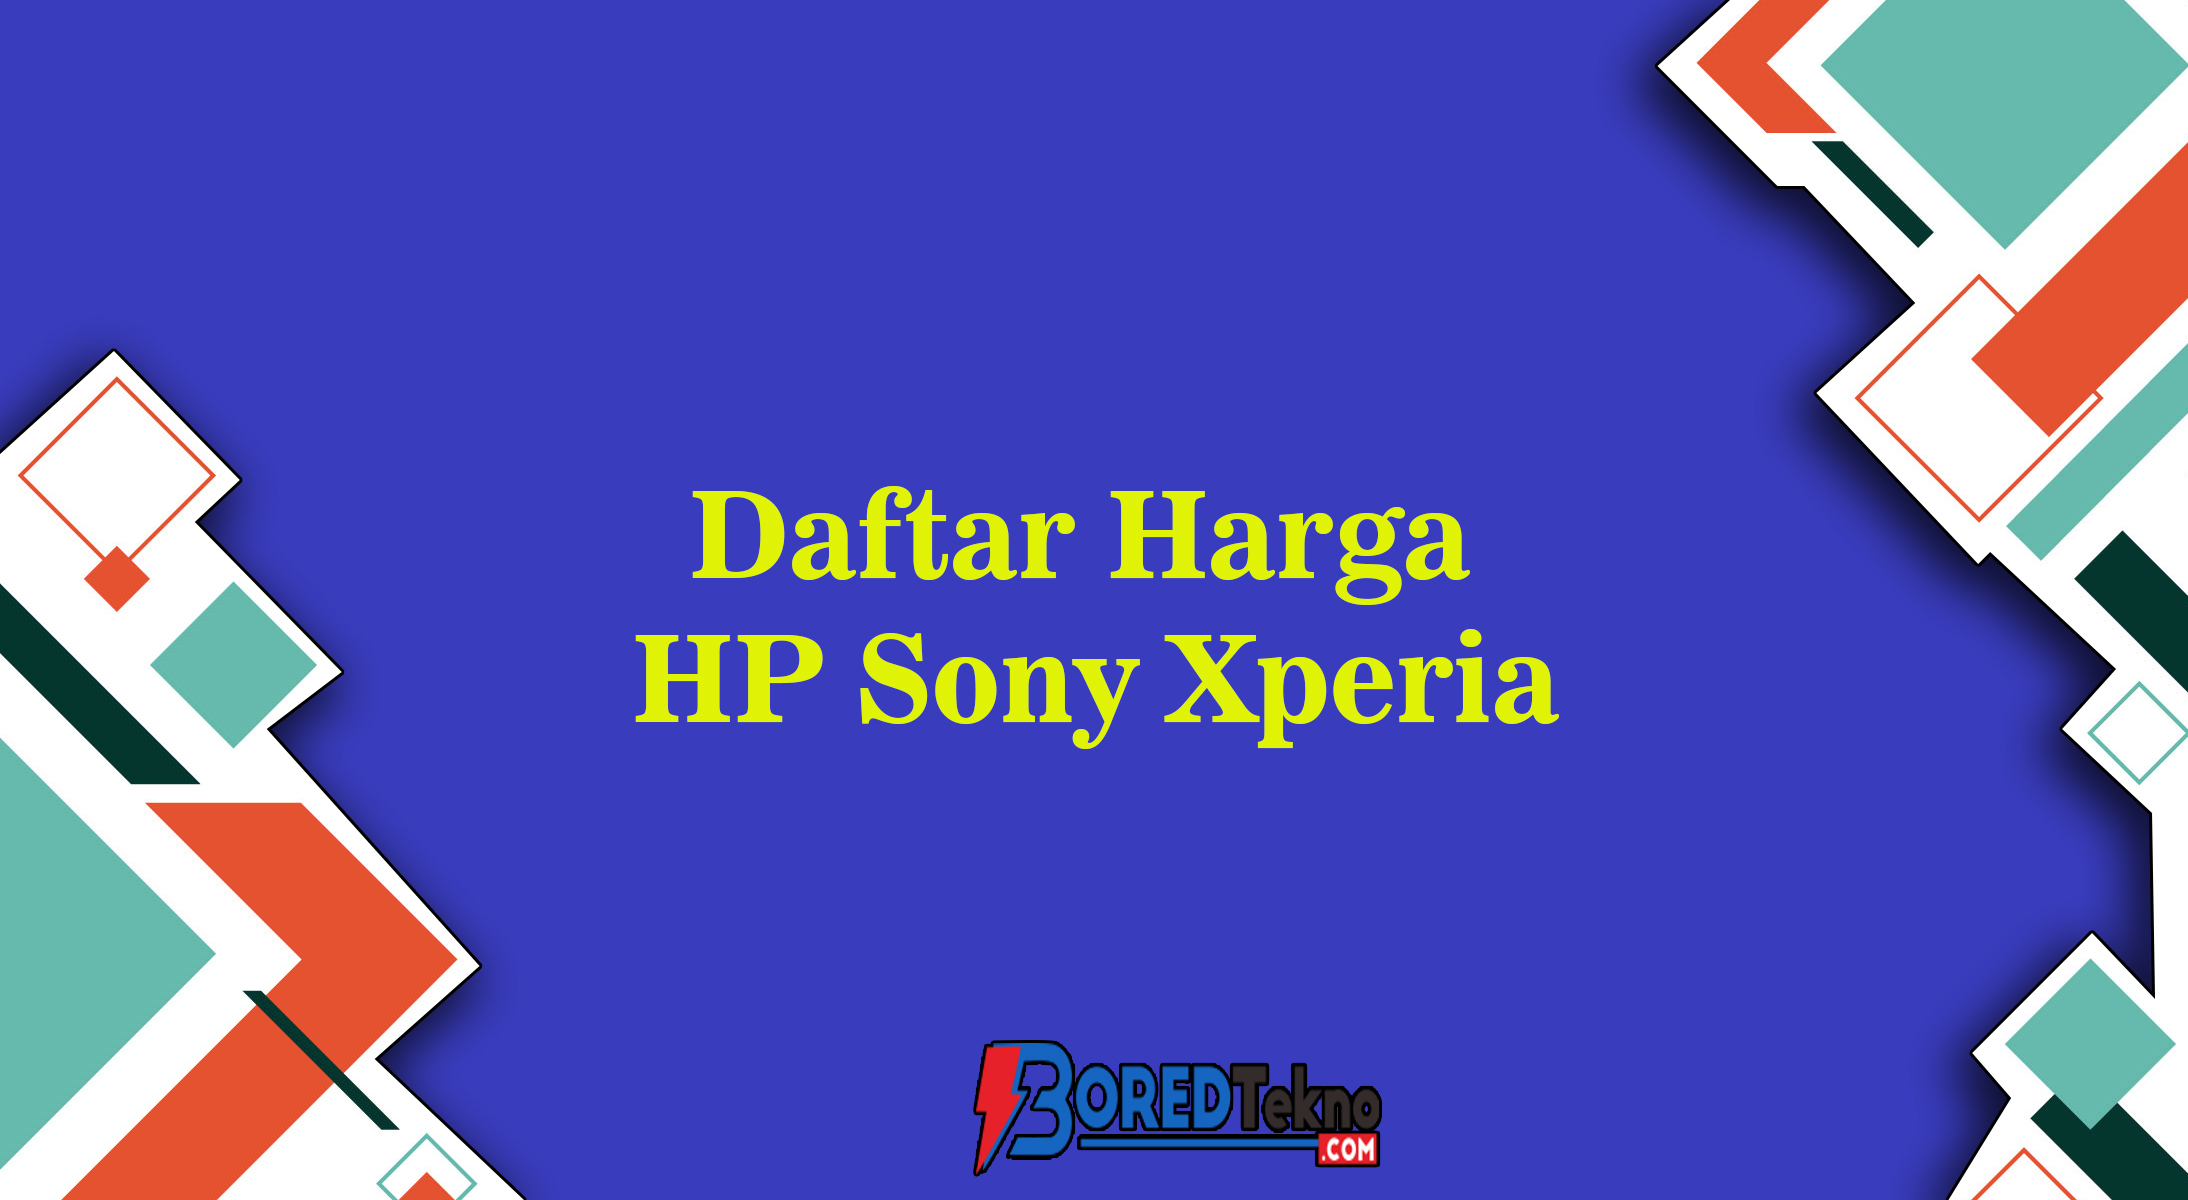 Daftar Harga HP Sony Xperia